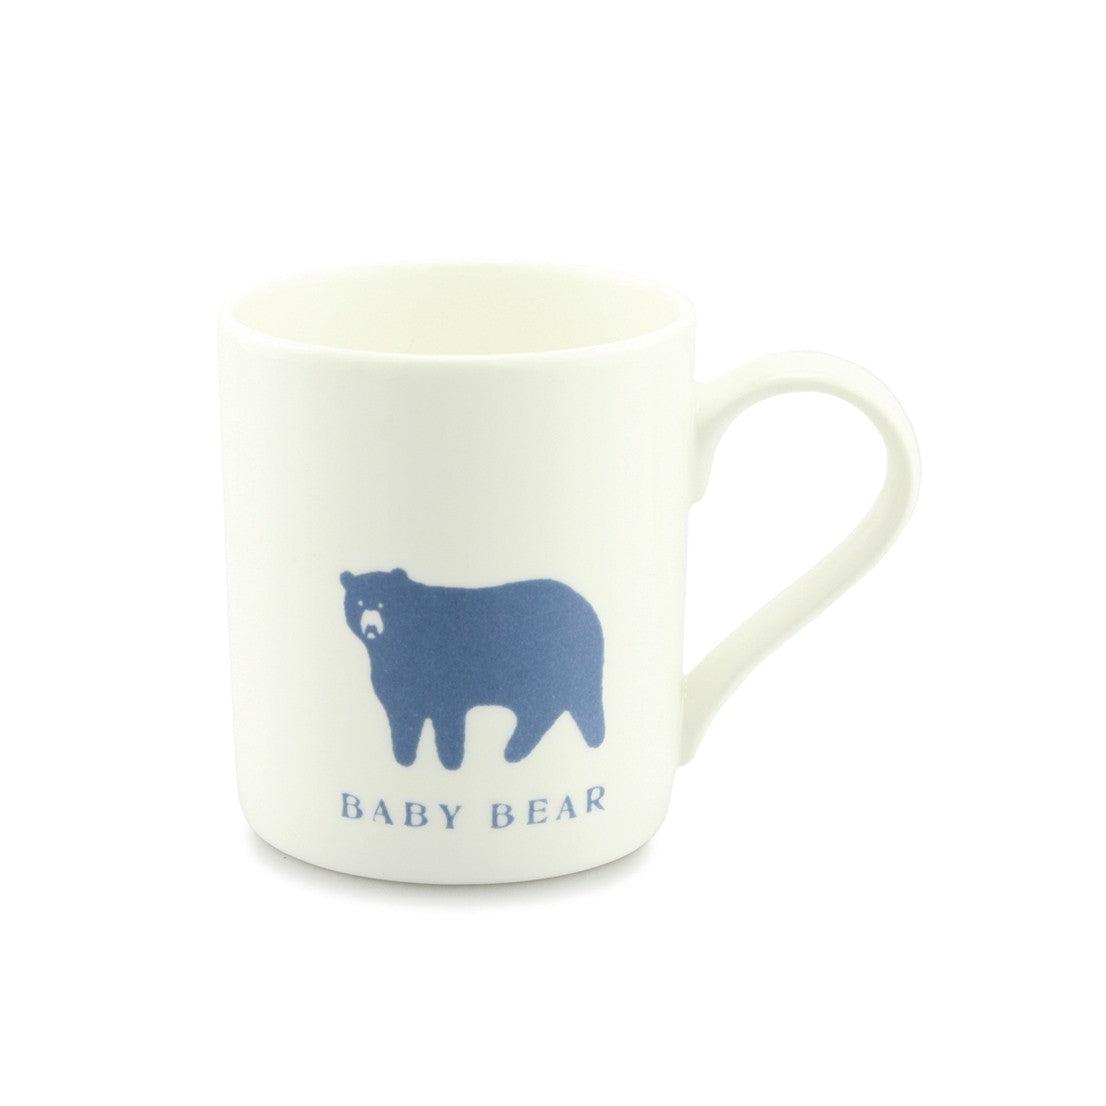 Blue Baby Bear Mug - The Nancy Smillie Shop - Art, Jewellery & Designer Gifts Glasgow